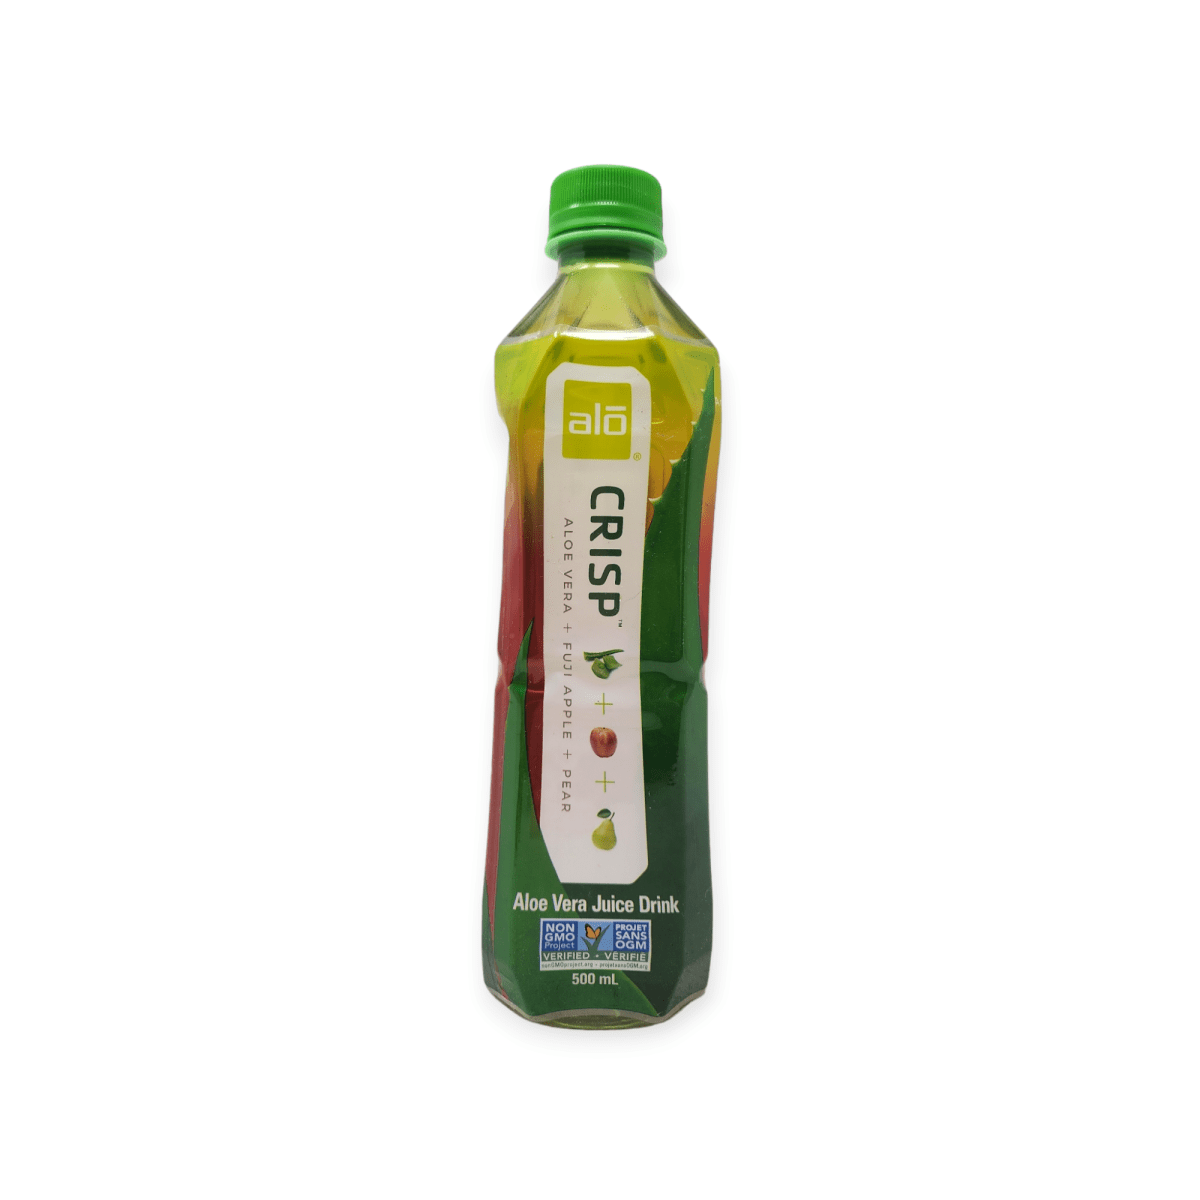 Alo Vera Fuji Apple Pear Juice Drink (500mL)